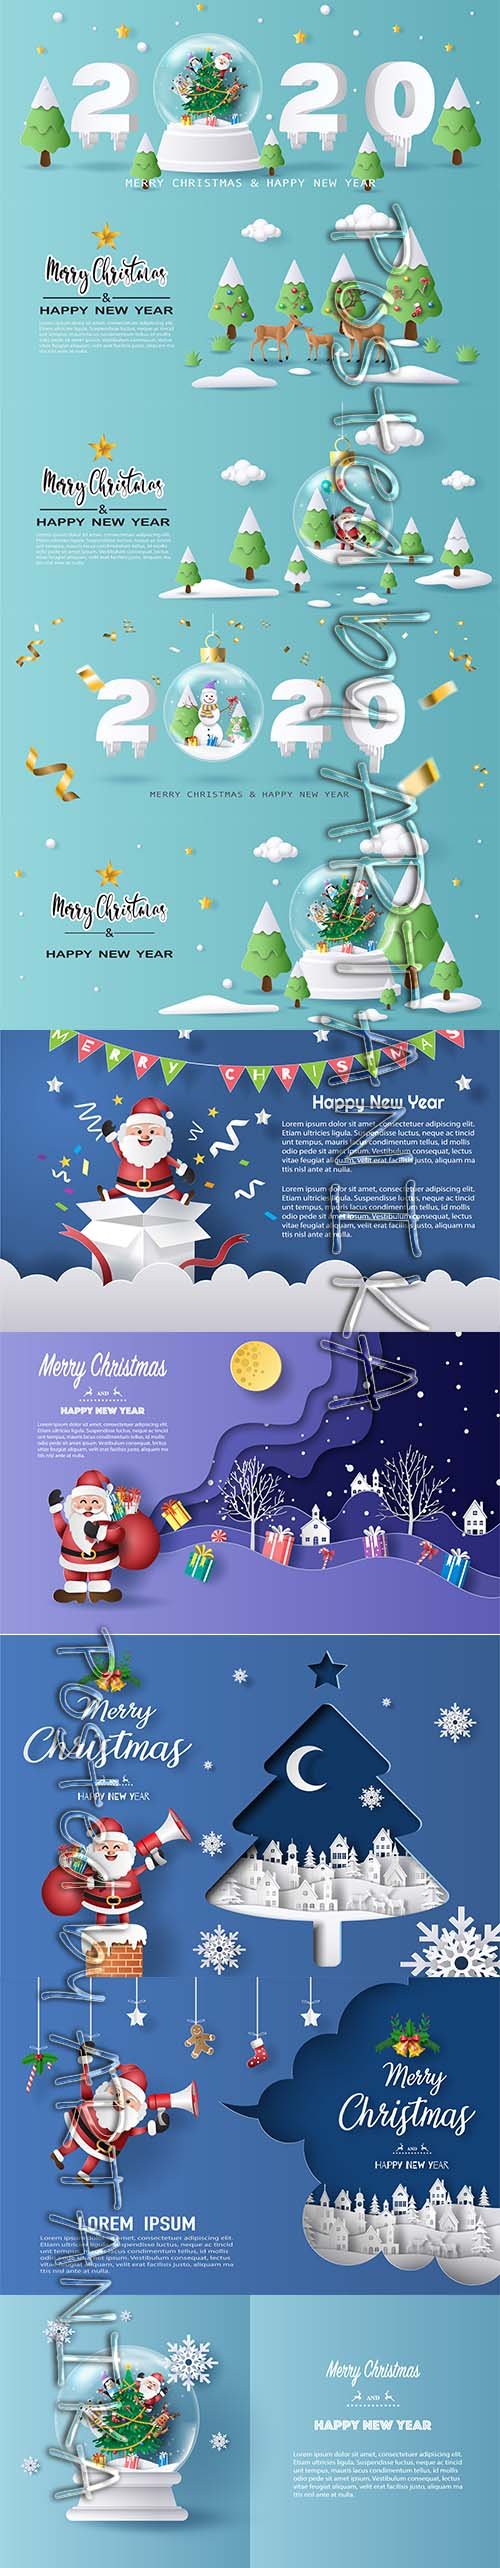 Paper Art - Christmas Happy New Year Illustrations Vol 6